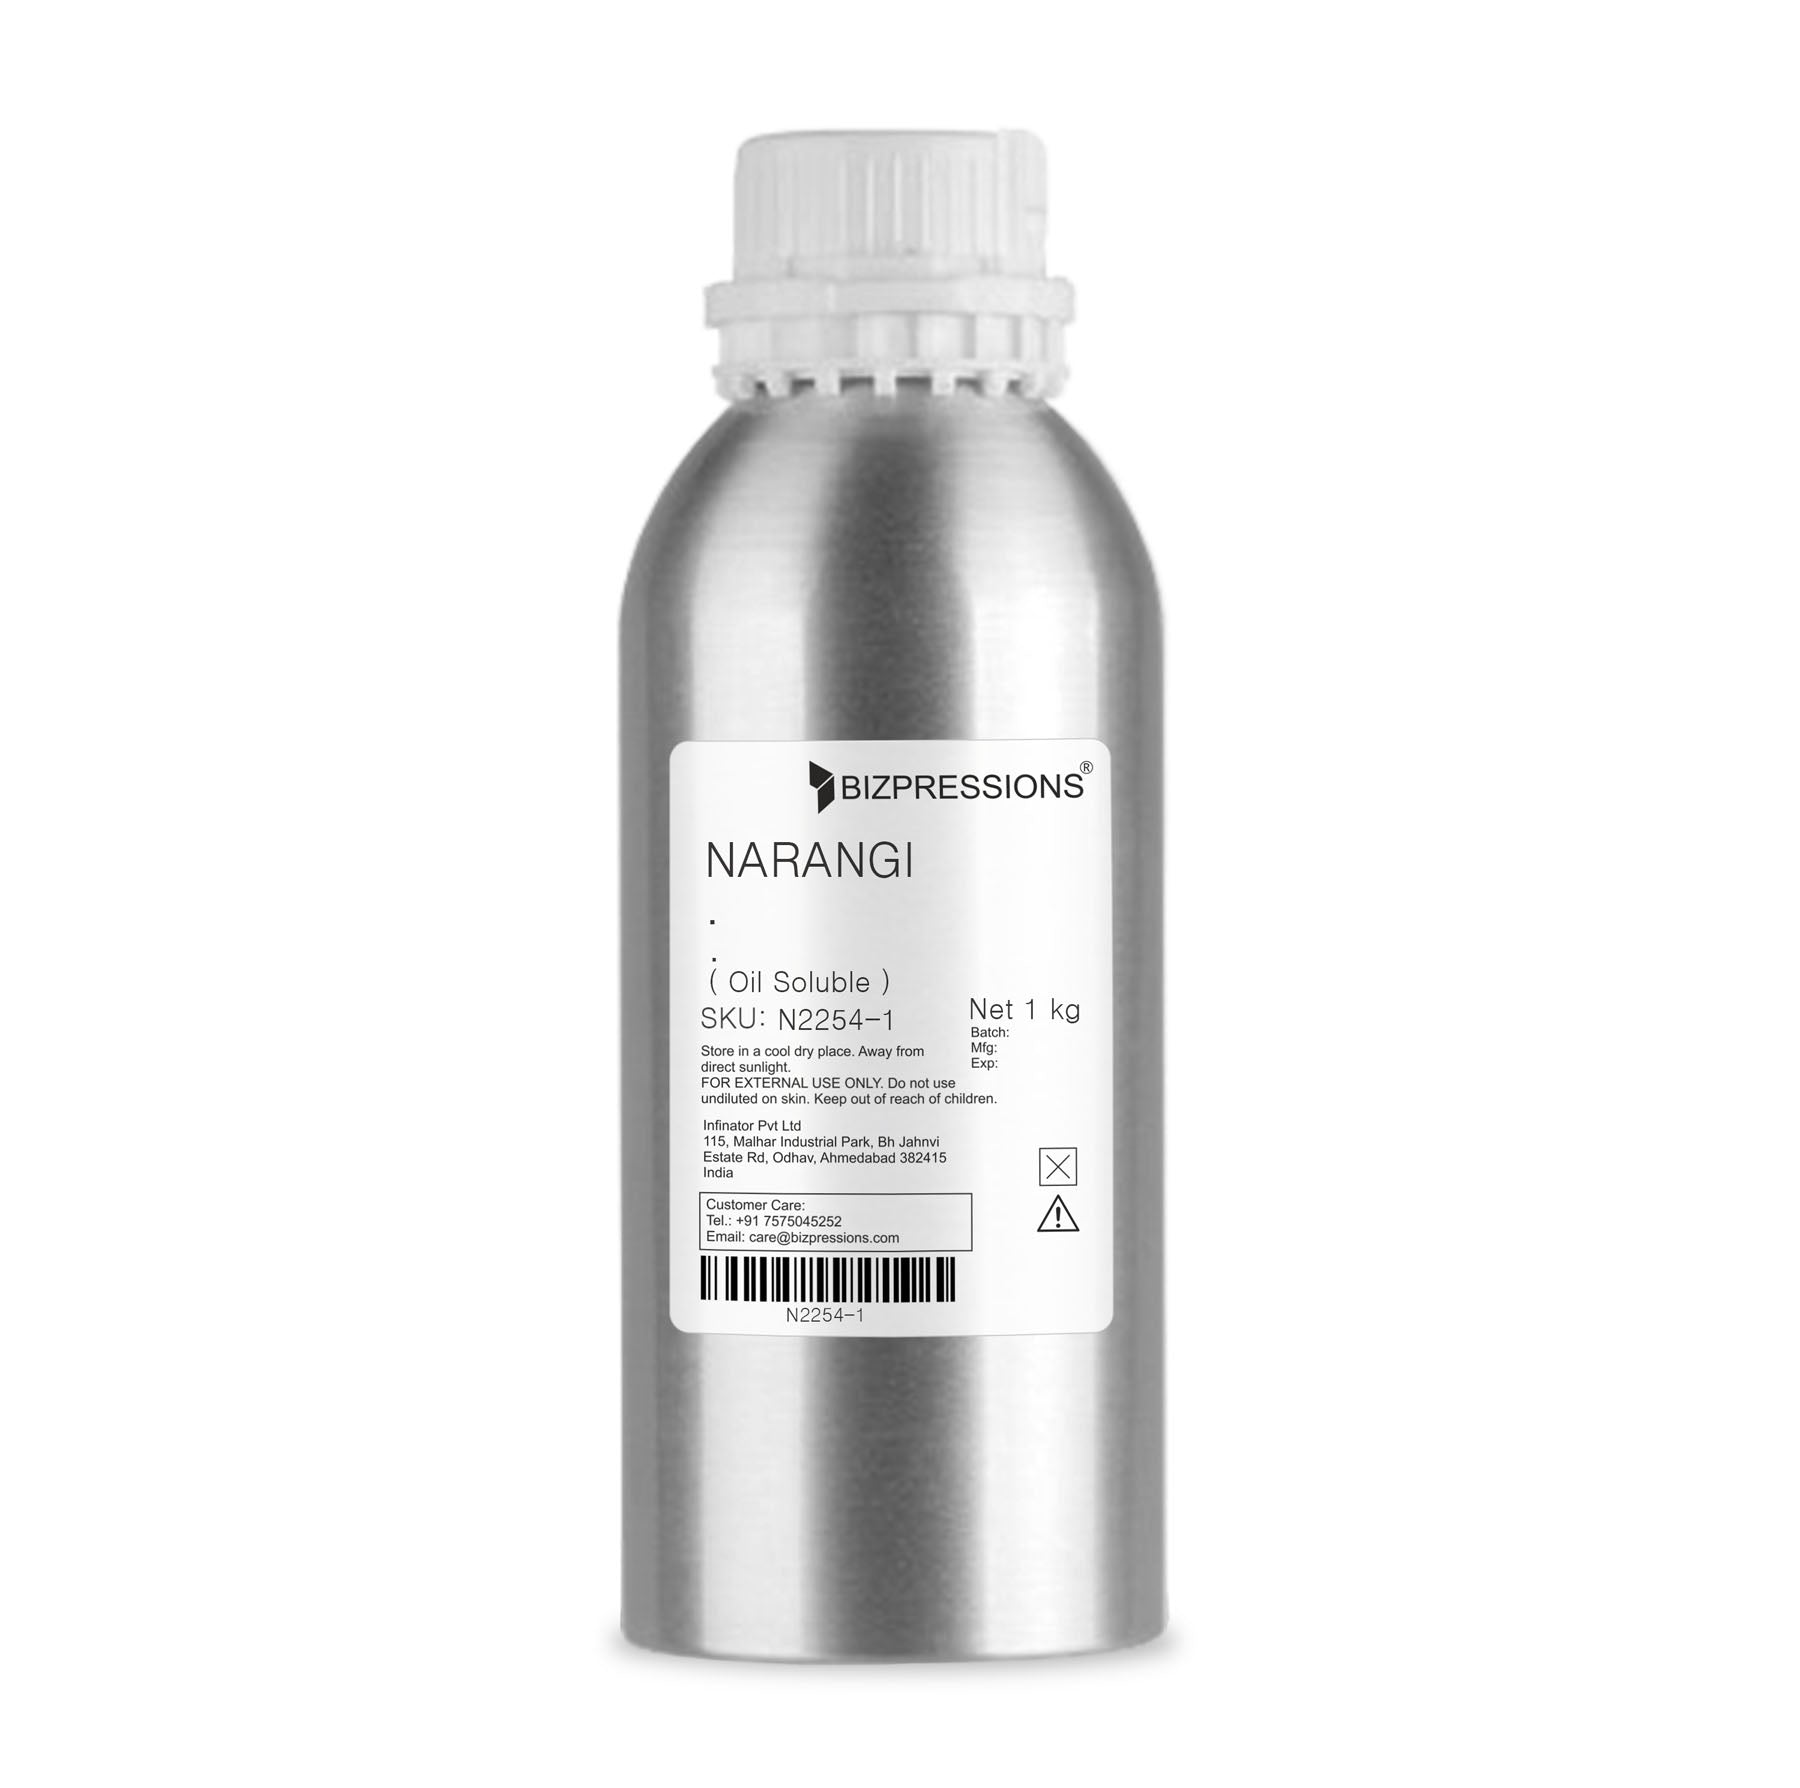 NARANGI - Fragrance ( Oil Soluble ) - 1 kg